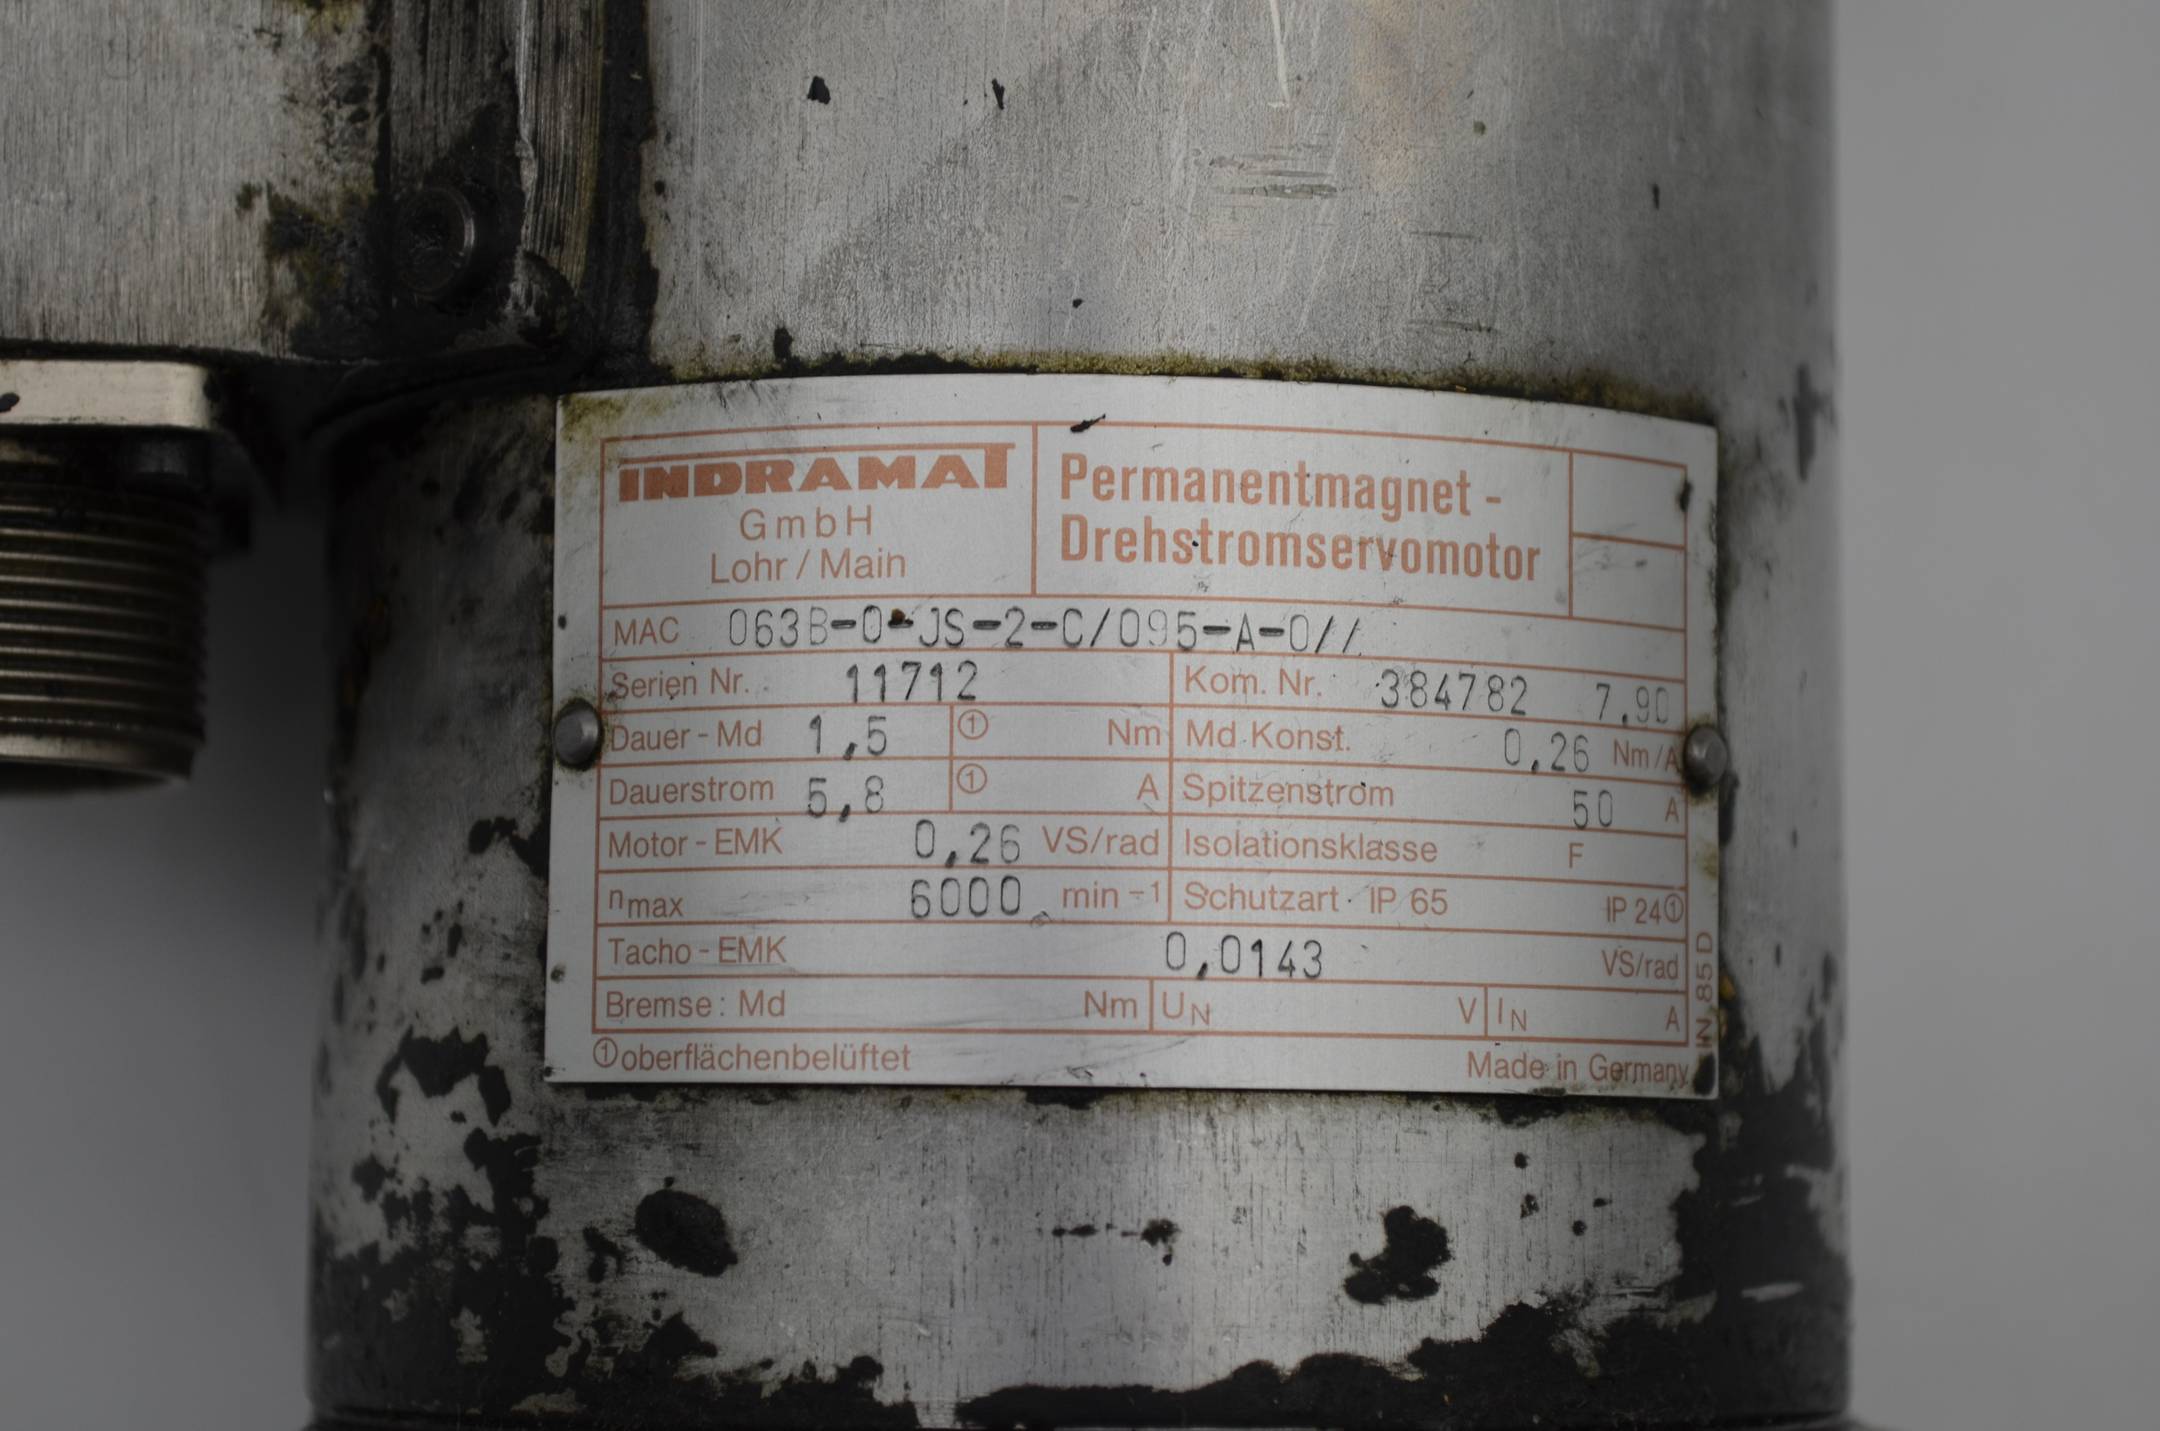 Indramat Permanentmagnet Drehstromservomotor 11712 063B-0-JS-2-C/095-A-0//